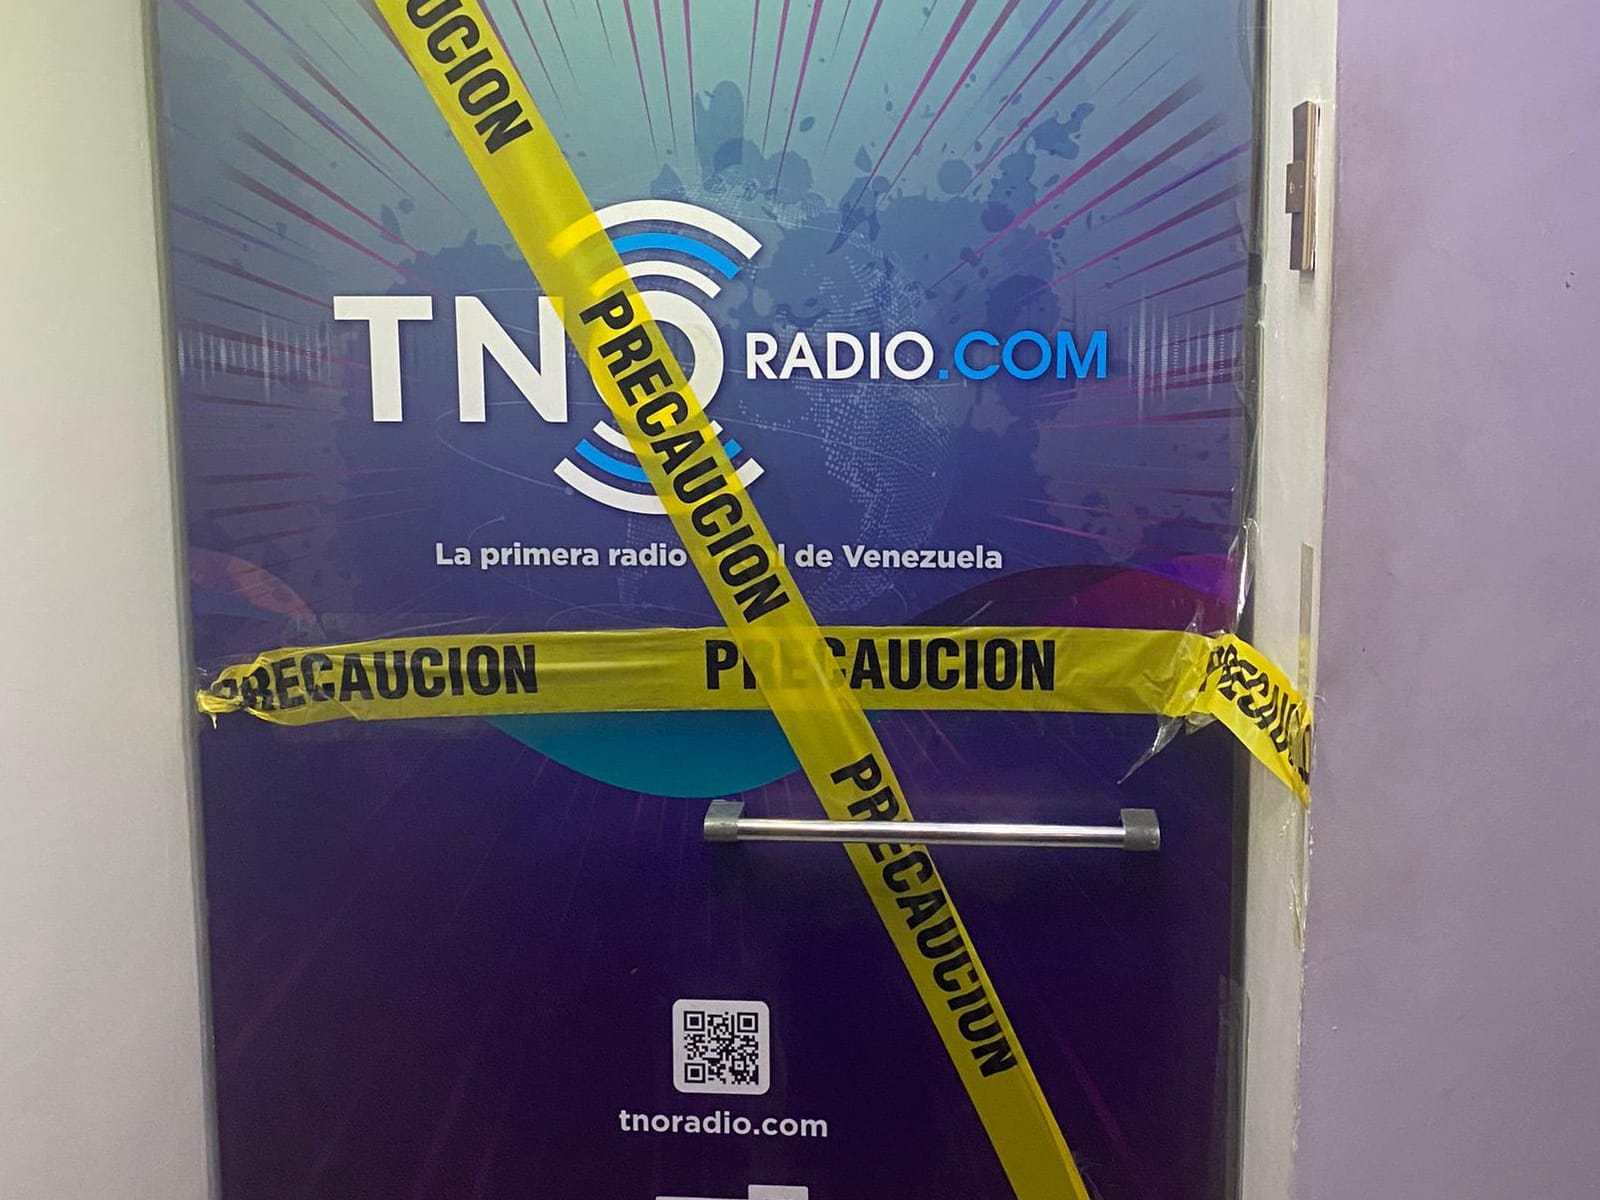 Espacio Público newspaper reported that the station's headquarters were raided